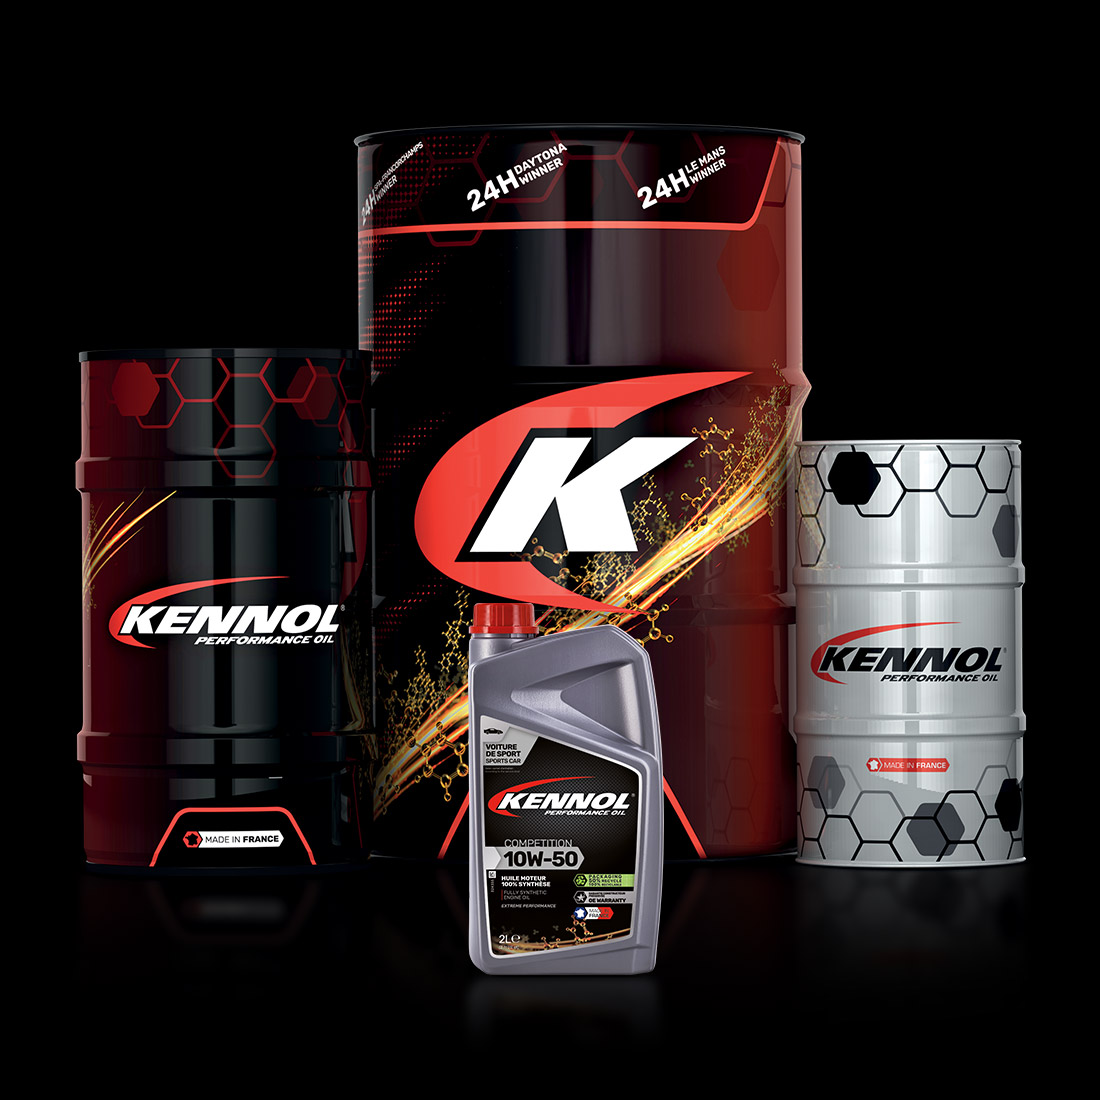 KENNOL COMPETITION 10W50 range packshot